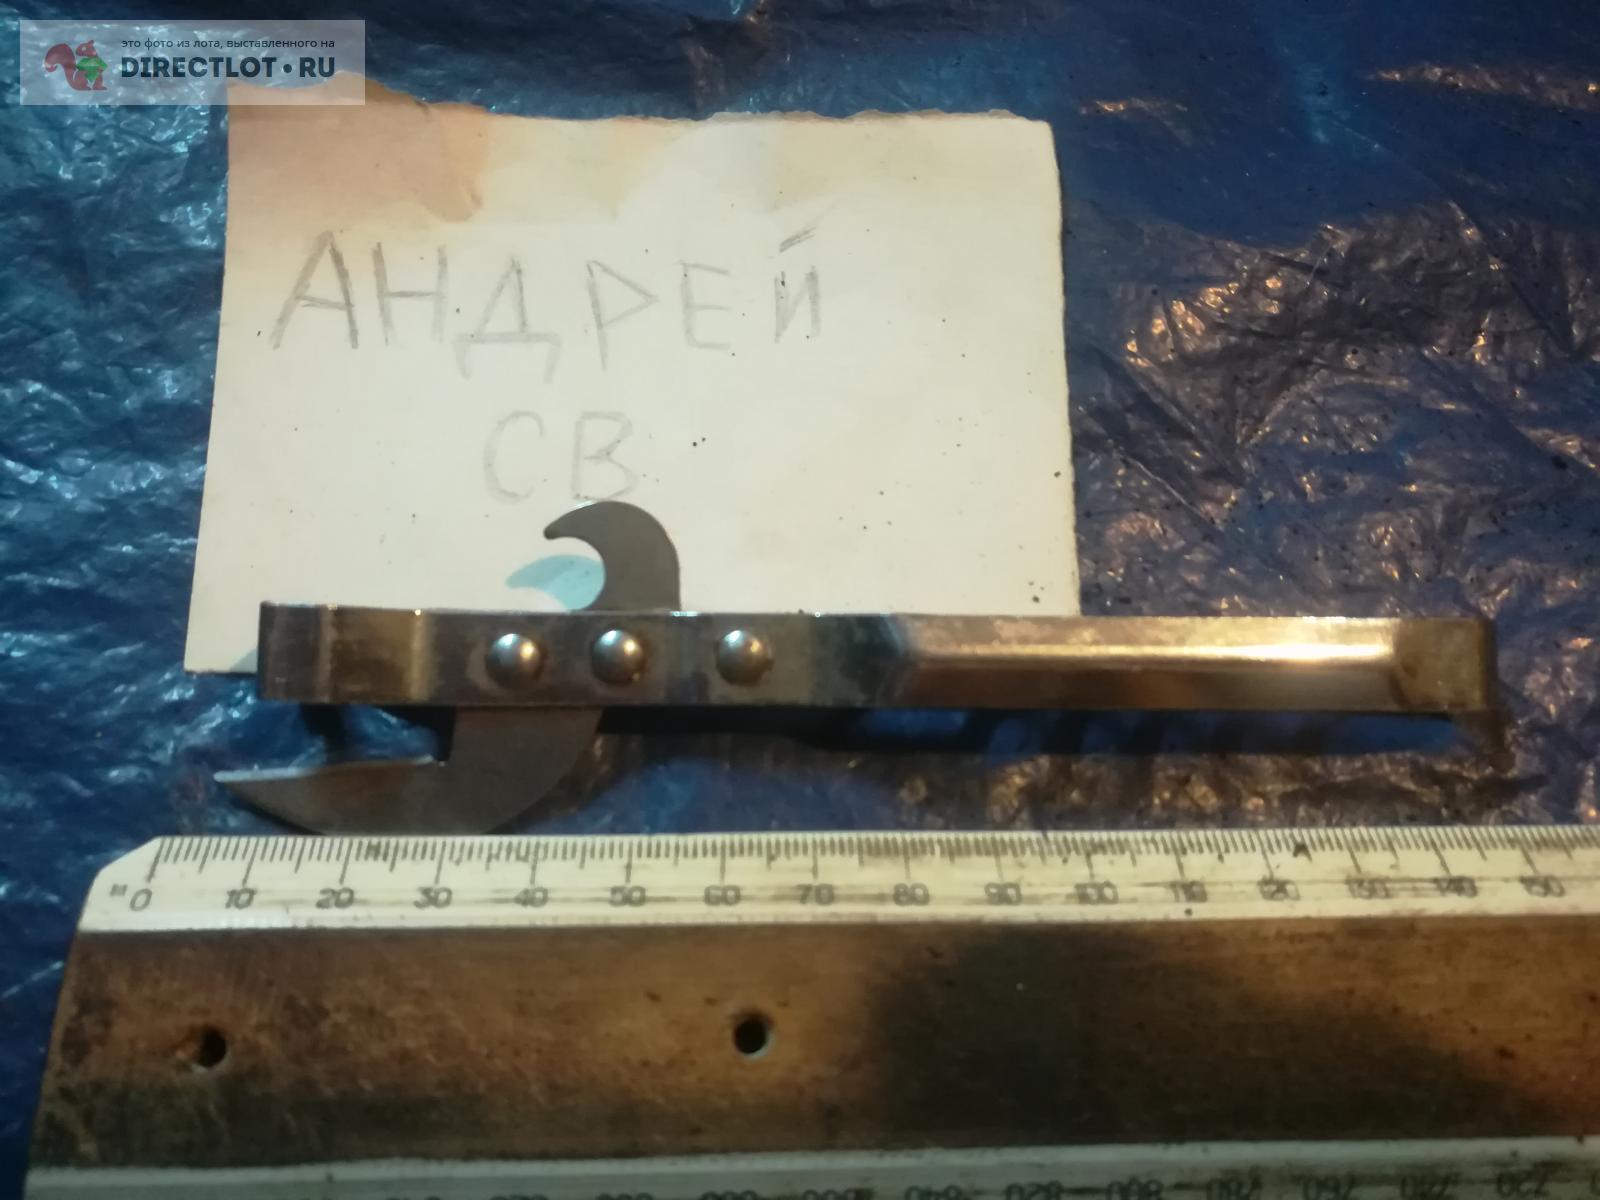 консервный нож со штопором  в Омске цена 100 Р на DIRECTLOT.RU .